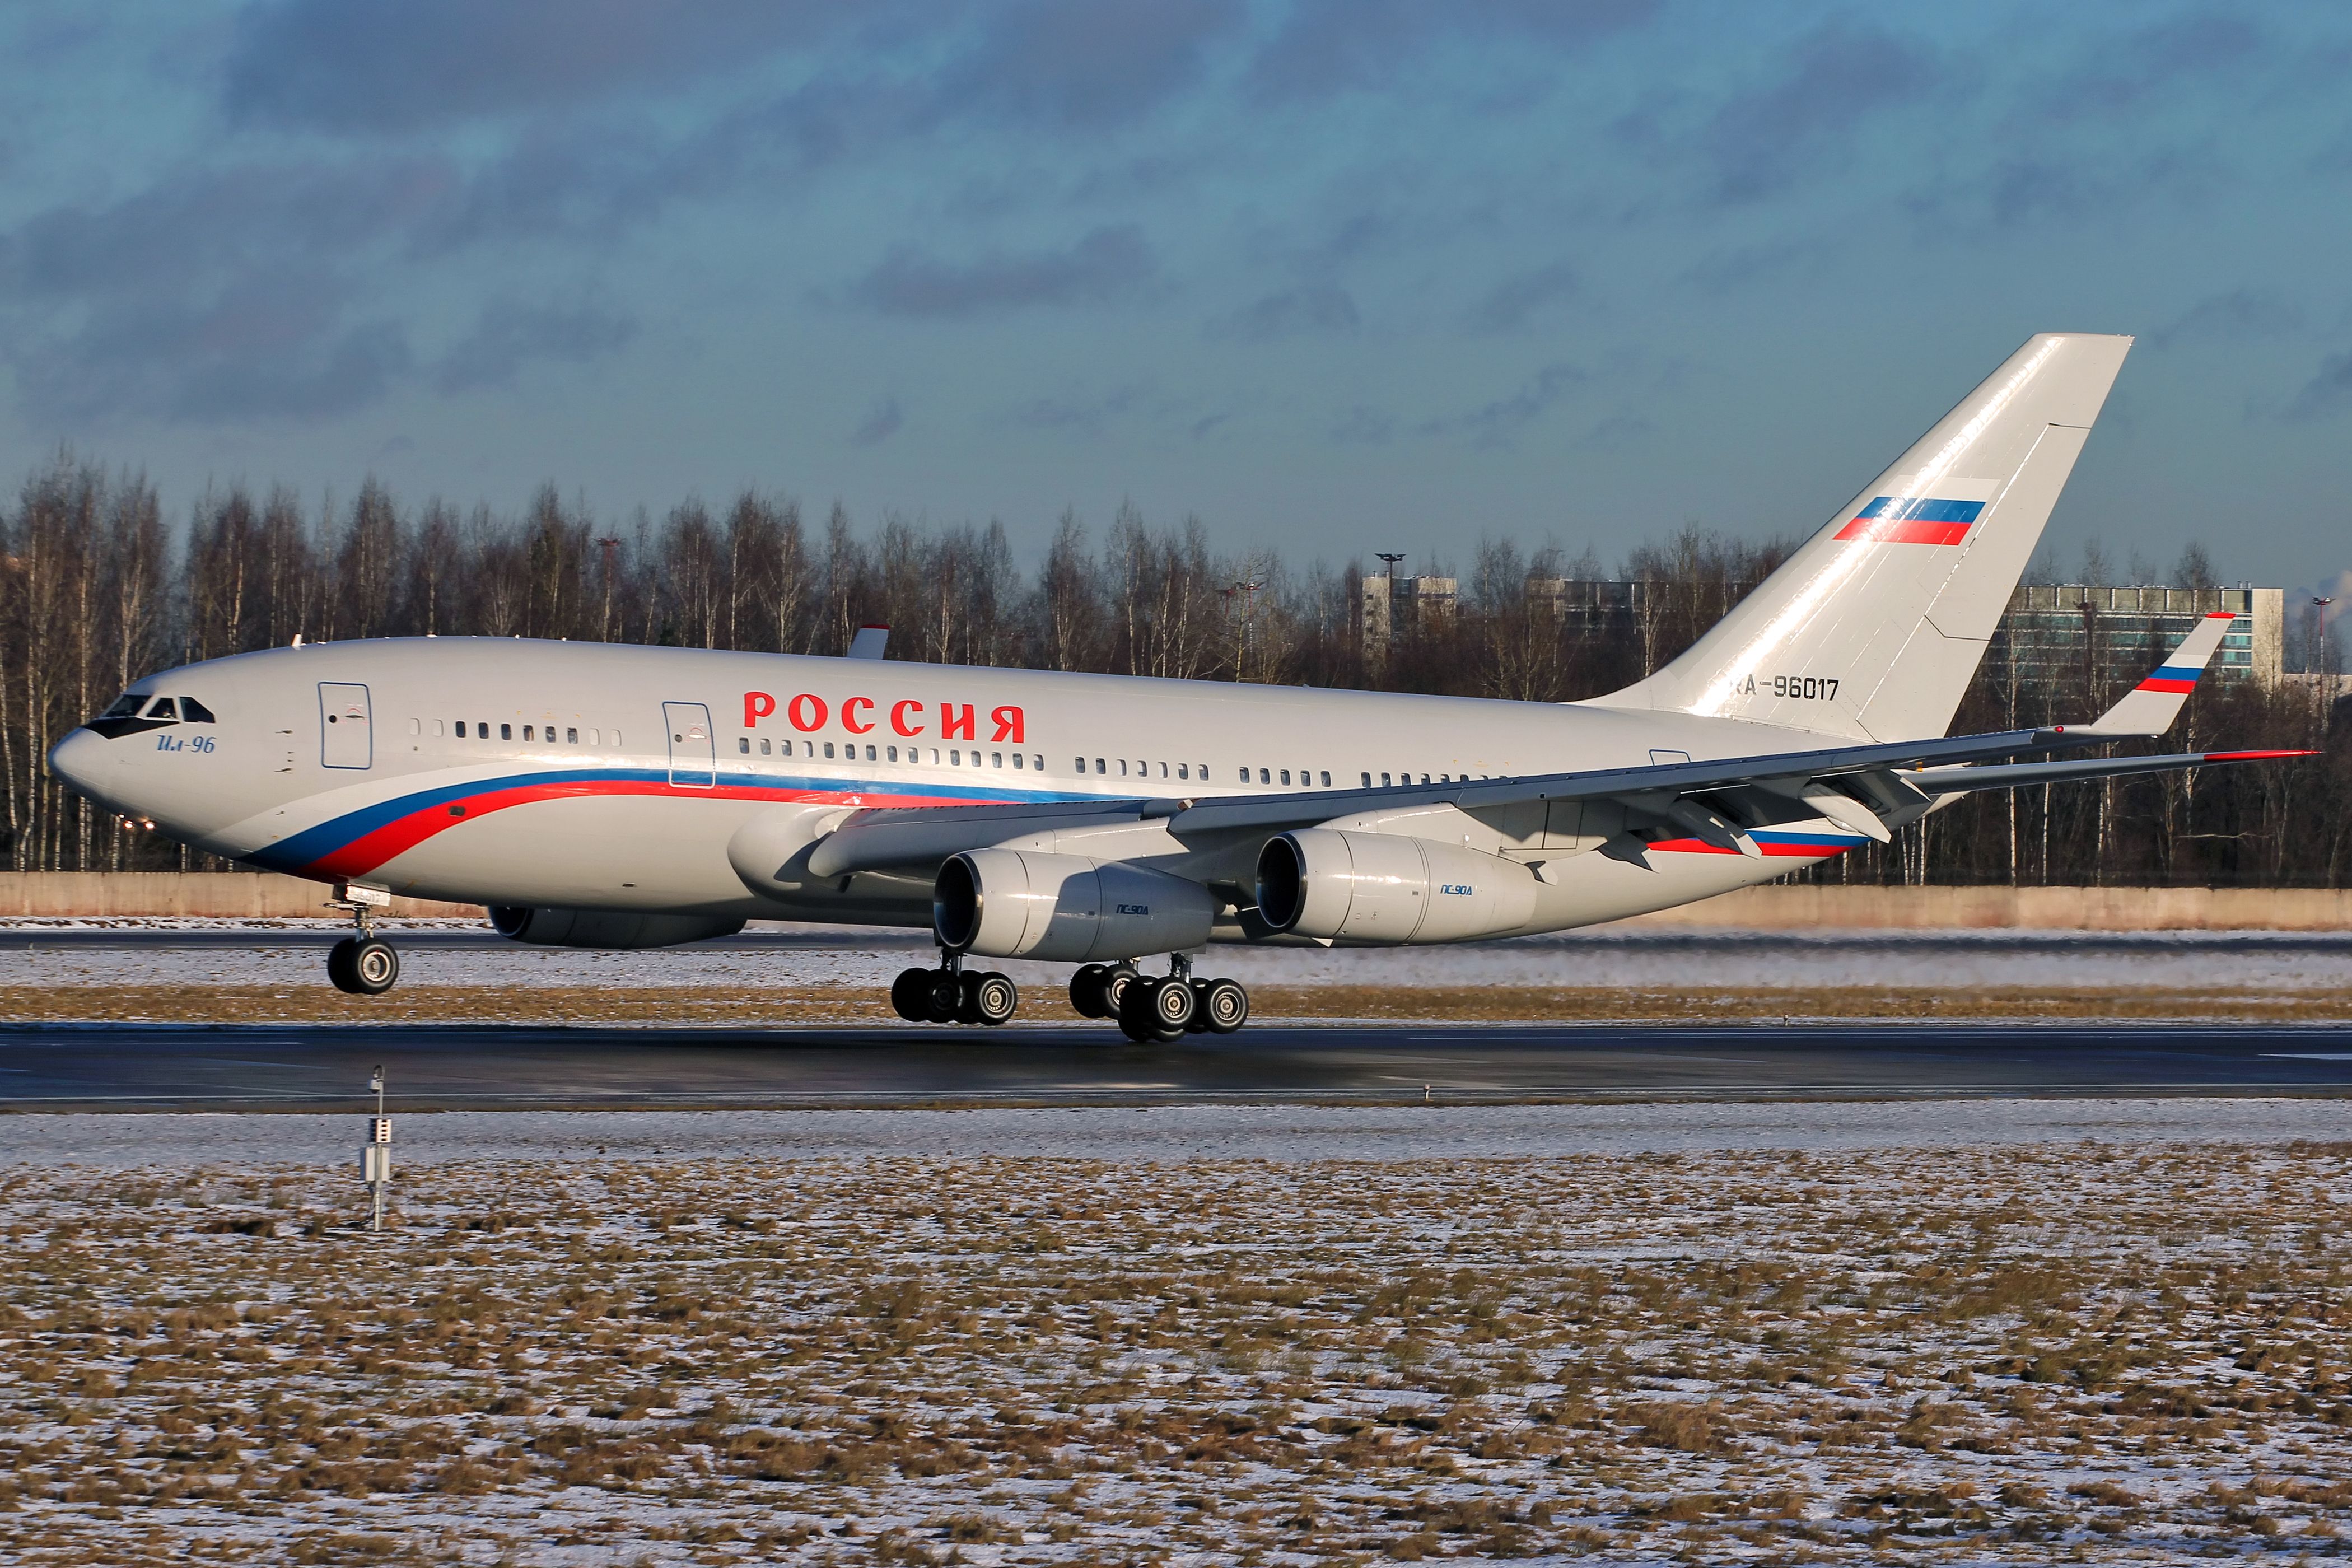 Rossiya's Ilyushin Il-96 aircraft